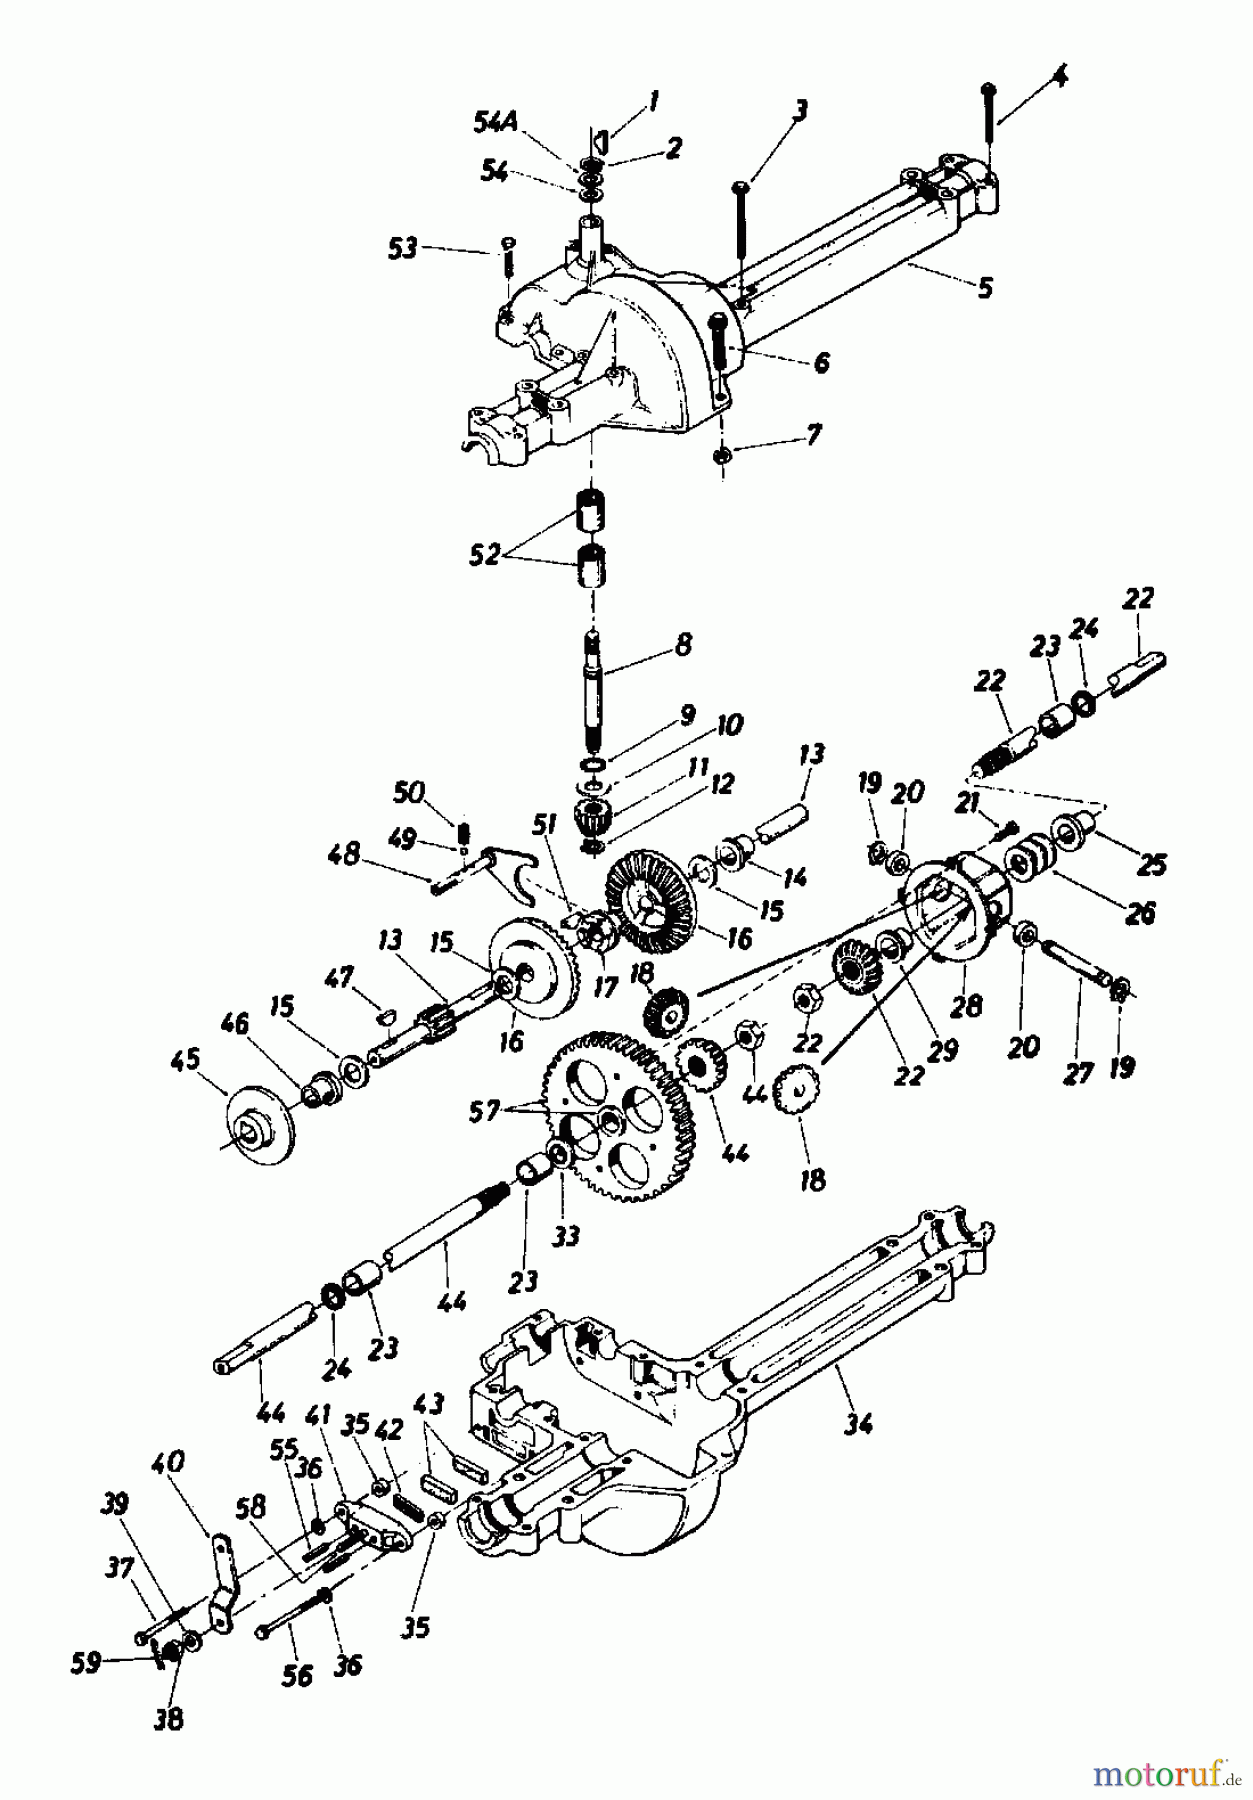  Raiffeisen Rasentraktoren 11 E 130-337D628  (1990) Getriebe